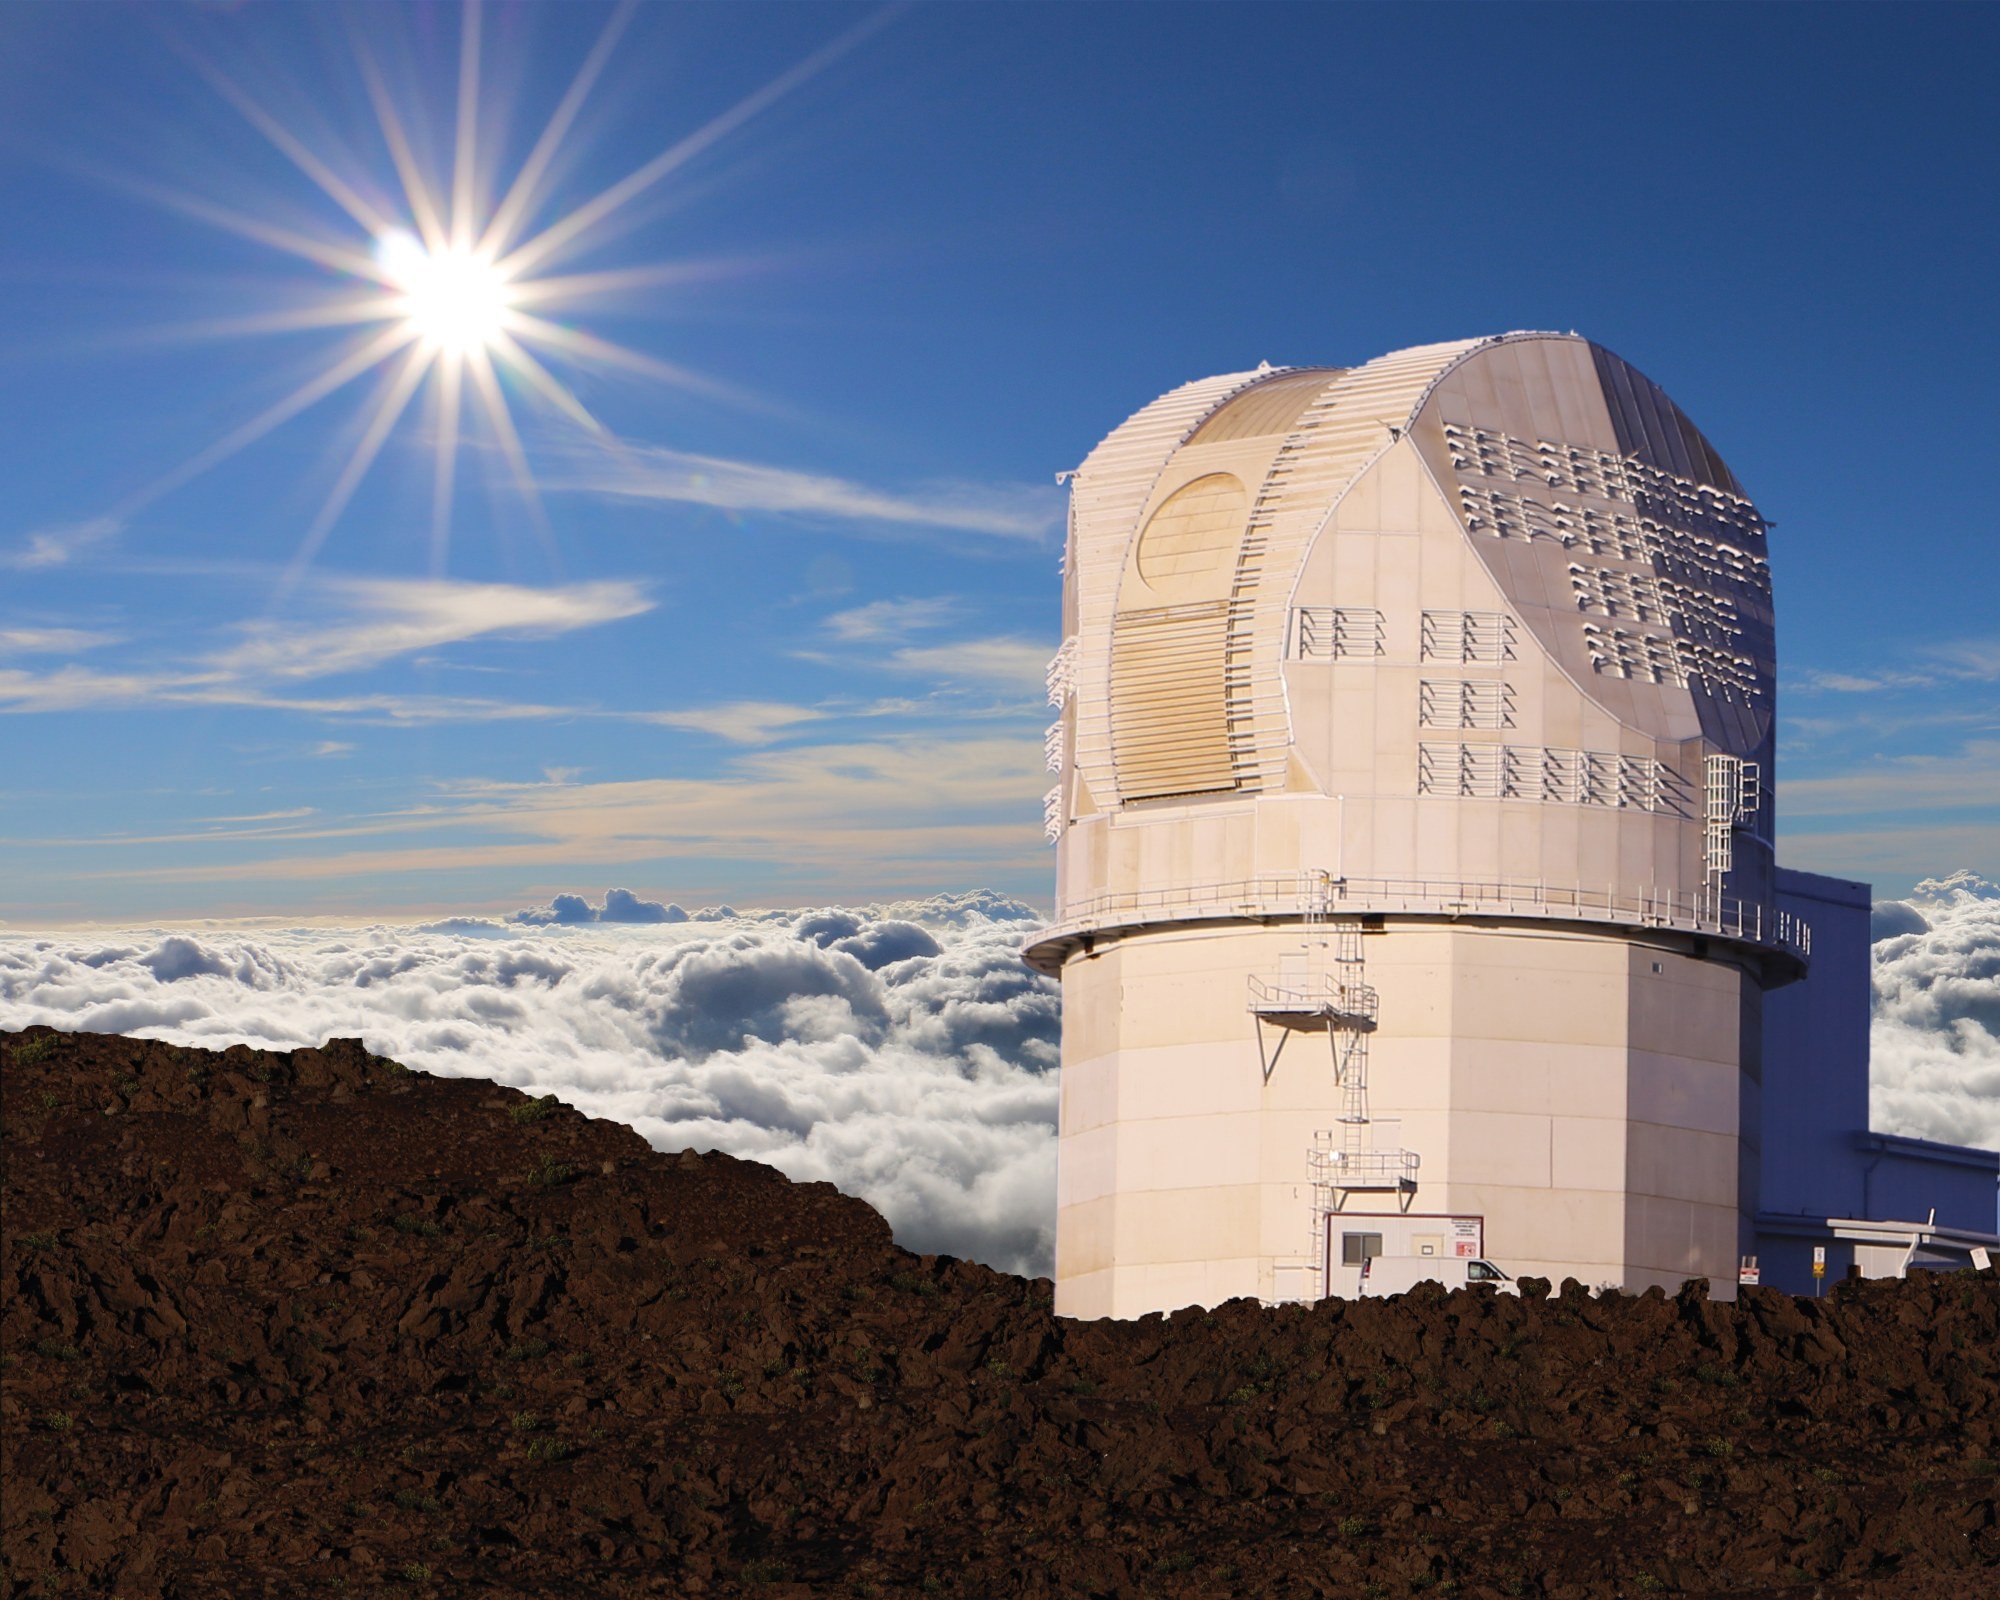 The Daniel K. Inouye Telescope atop Mount Haleakalā, in Maui, Hawaii